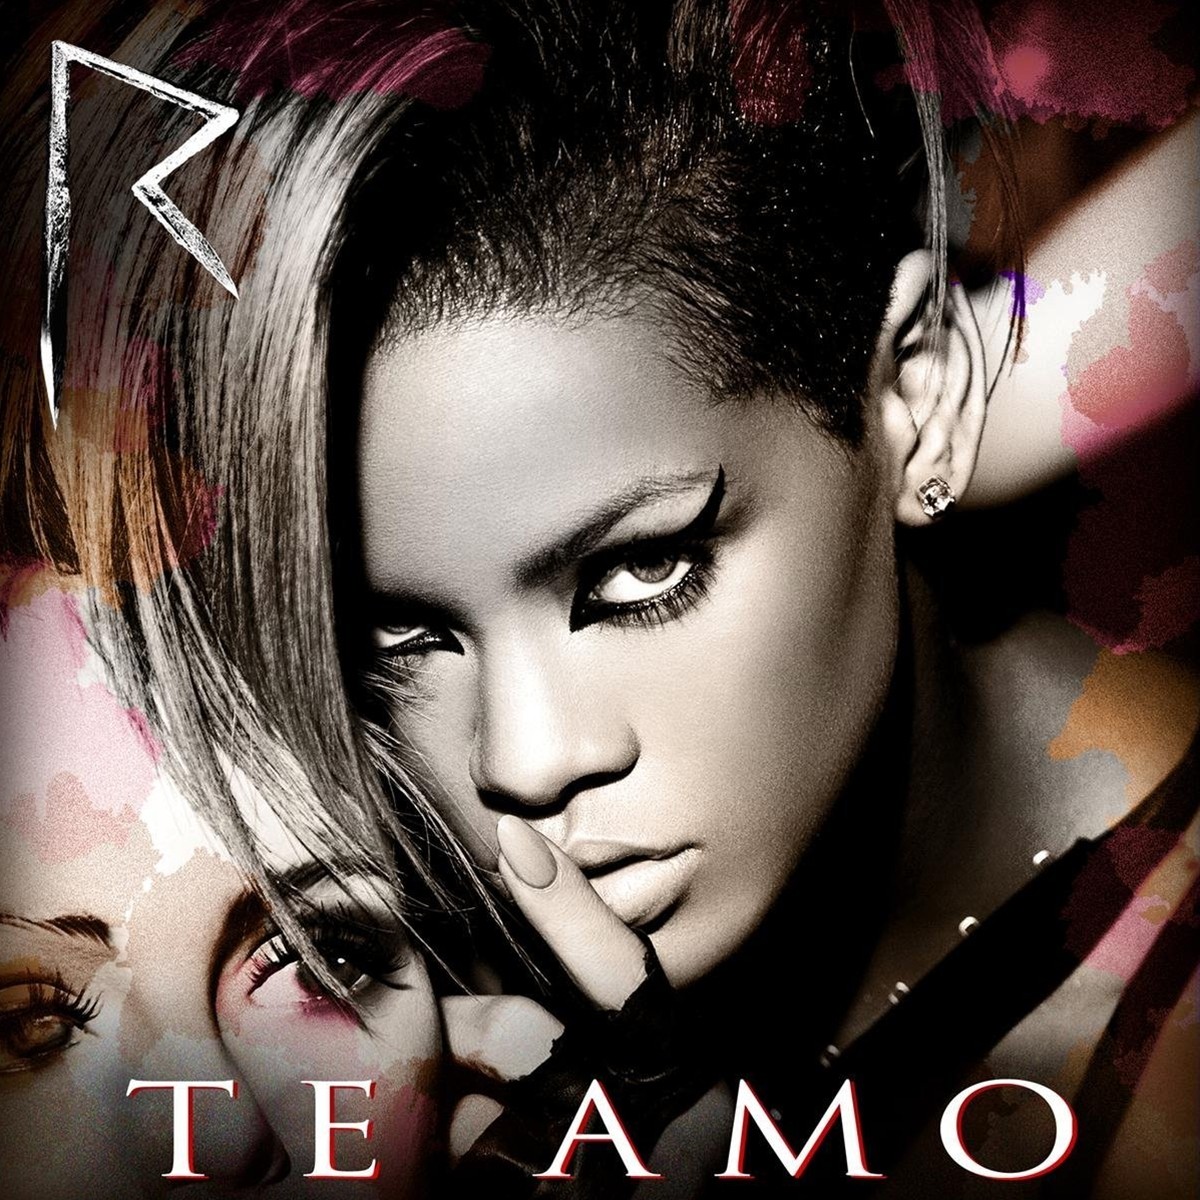 http://1.bp.blogspot.com/_6lV5hzNR1fU/S_Ukv7VW9PI/AAAAAAAAIa4/FVl4RKniyKU/s1600/Rihanna-Te-Amo-Official-Single-Cover.jpg